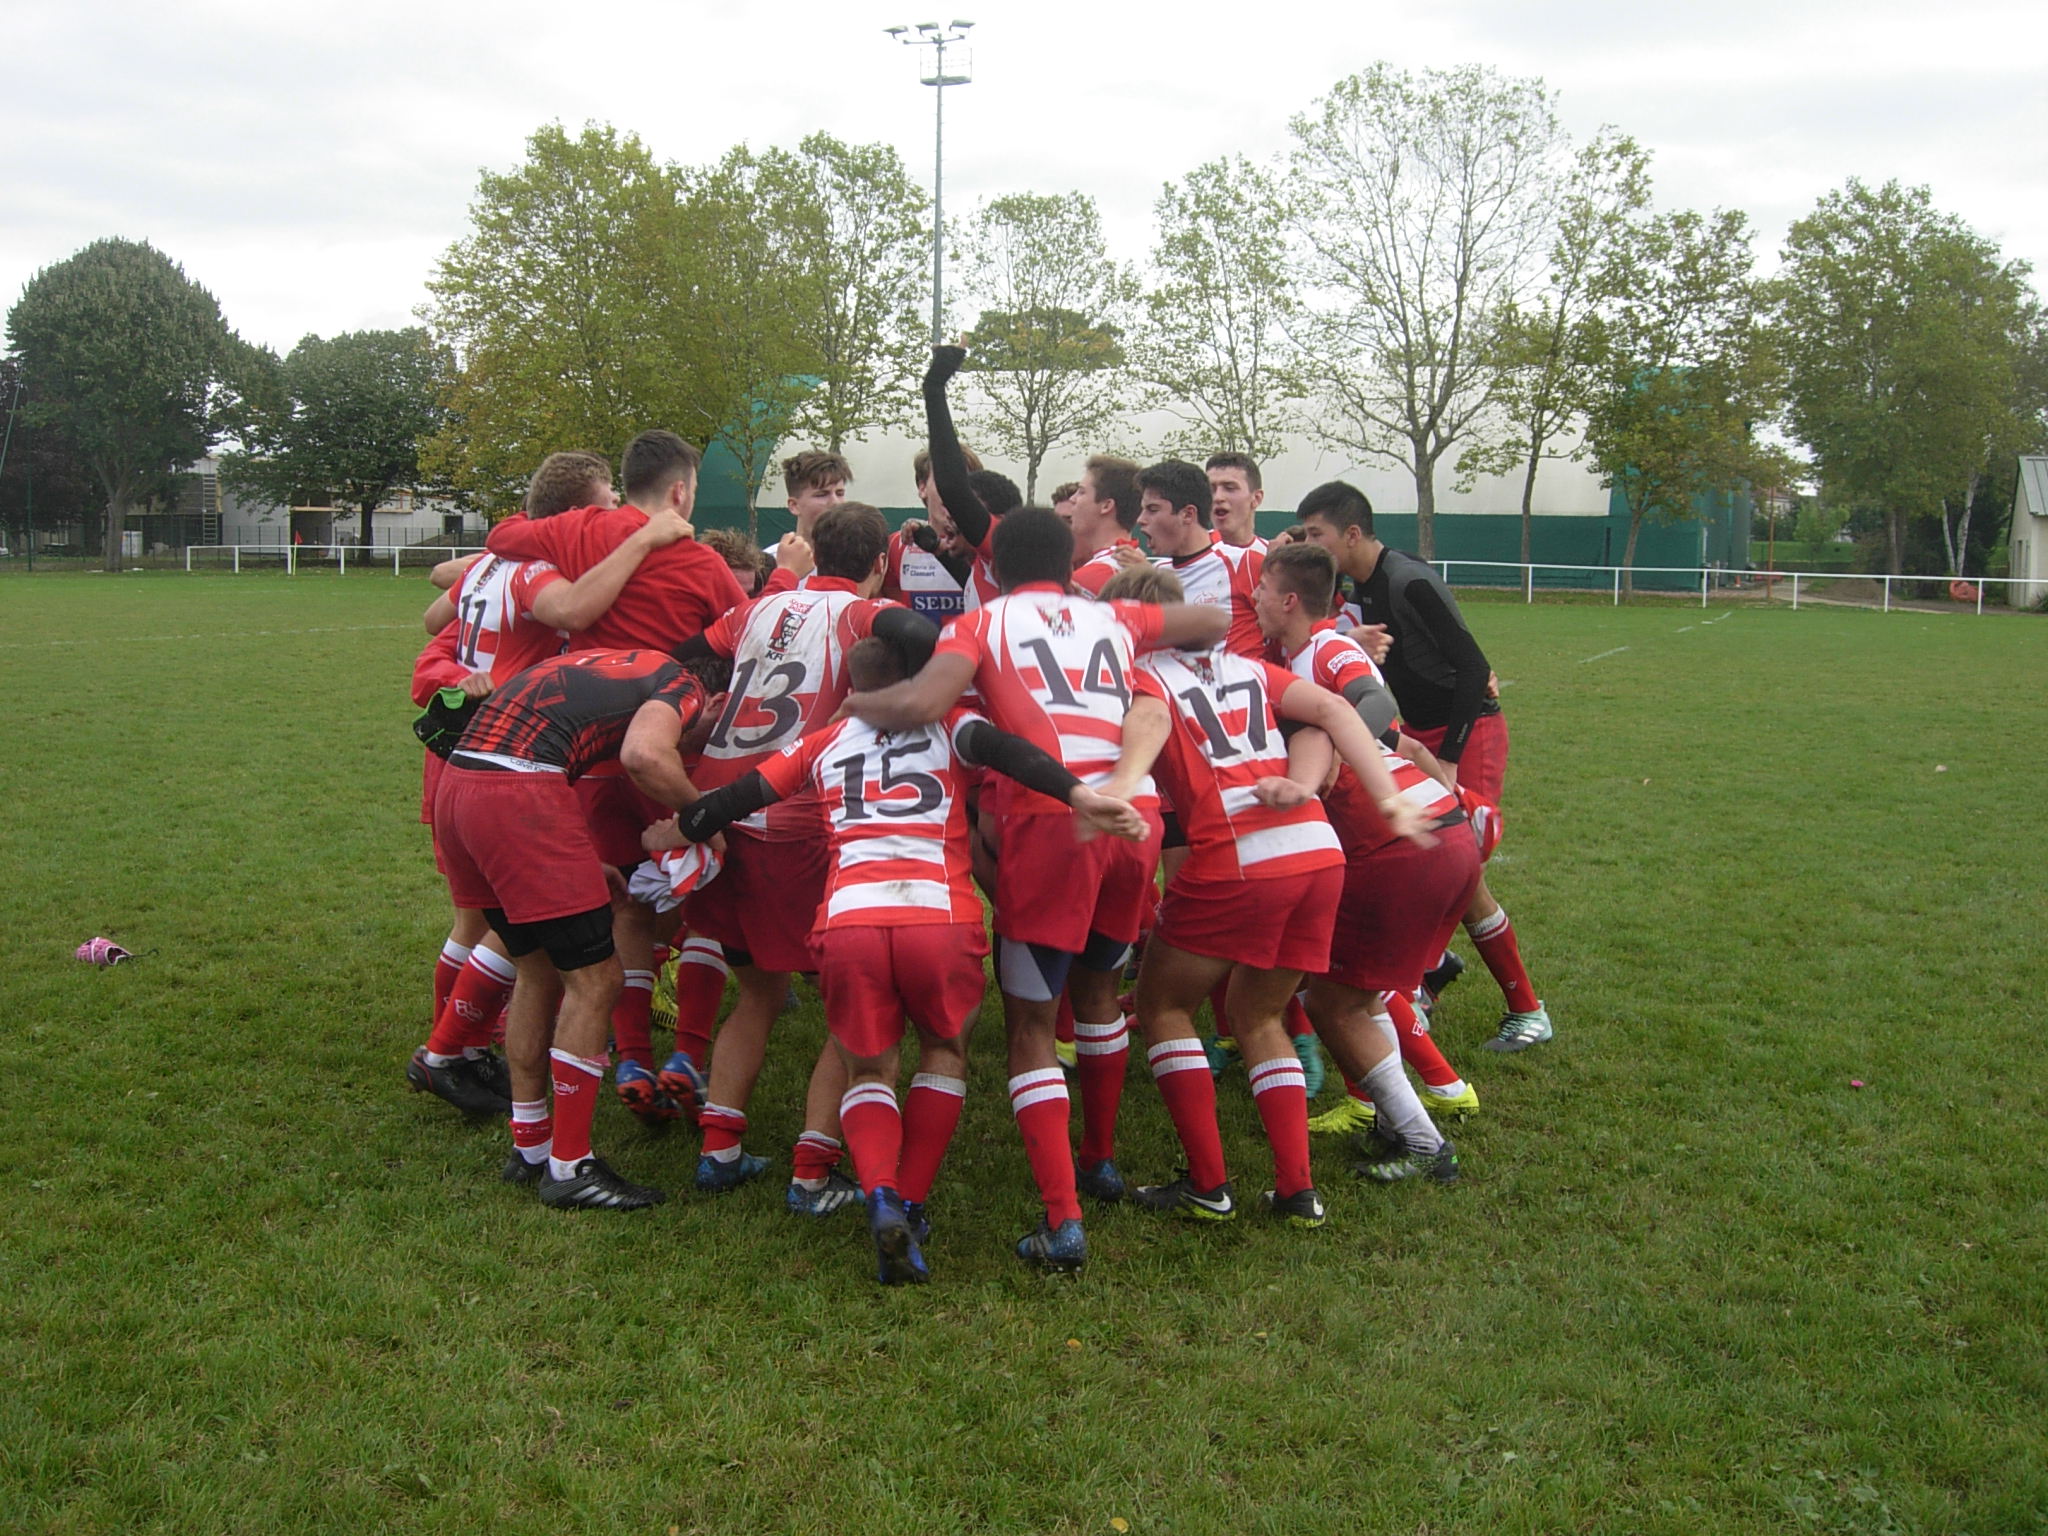 Clamart Rugby 92 -Balandrade Victoire des juniors contre Montesson- dimanche 8 septembre 2017